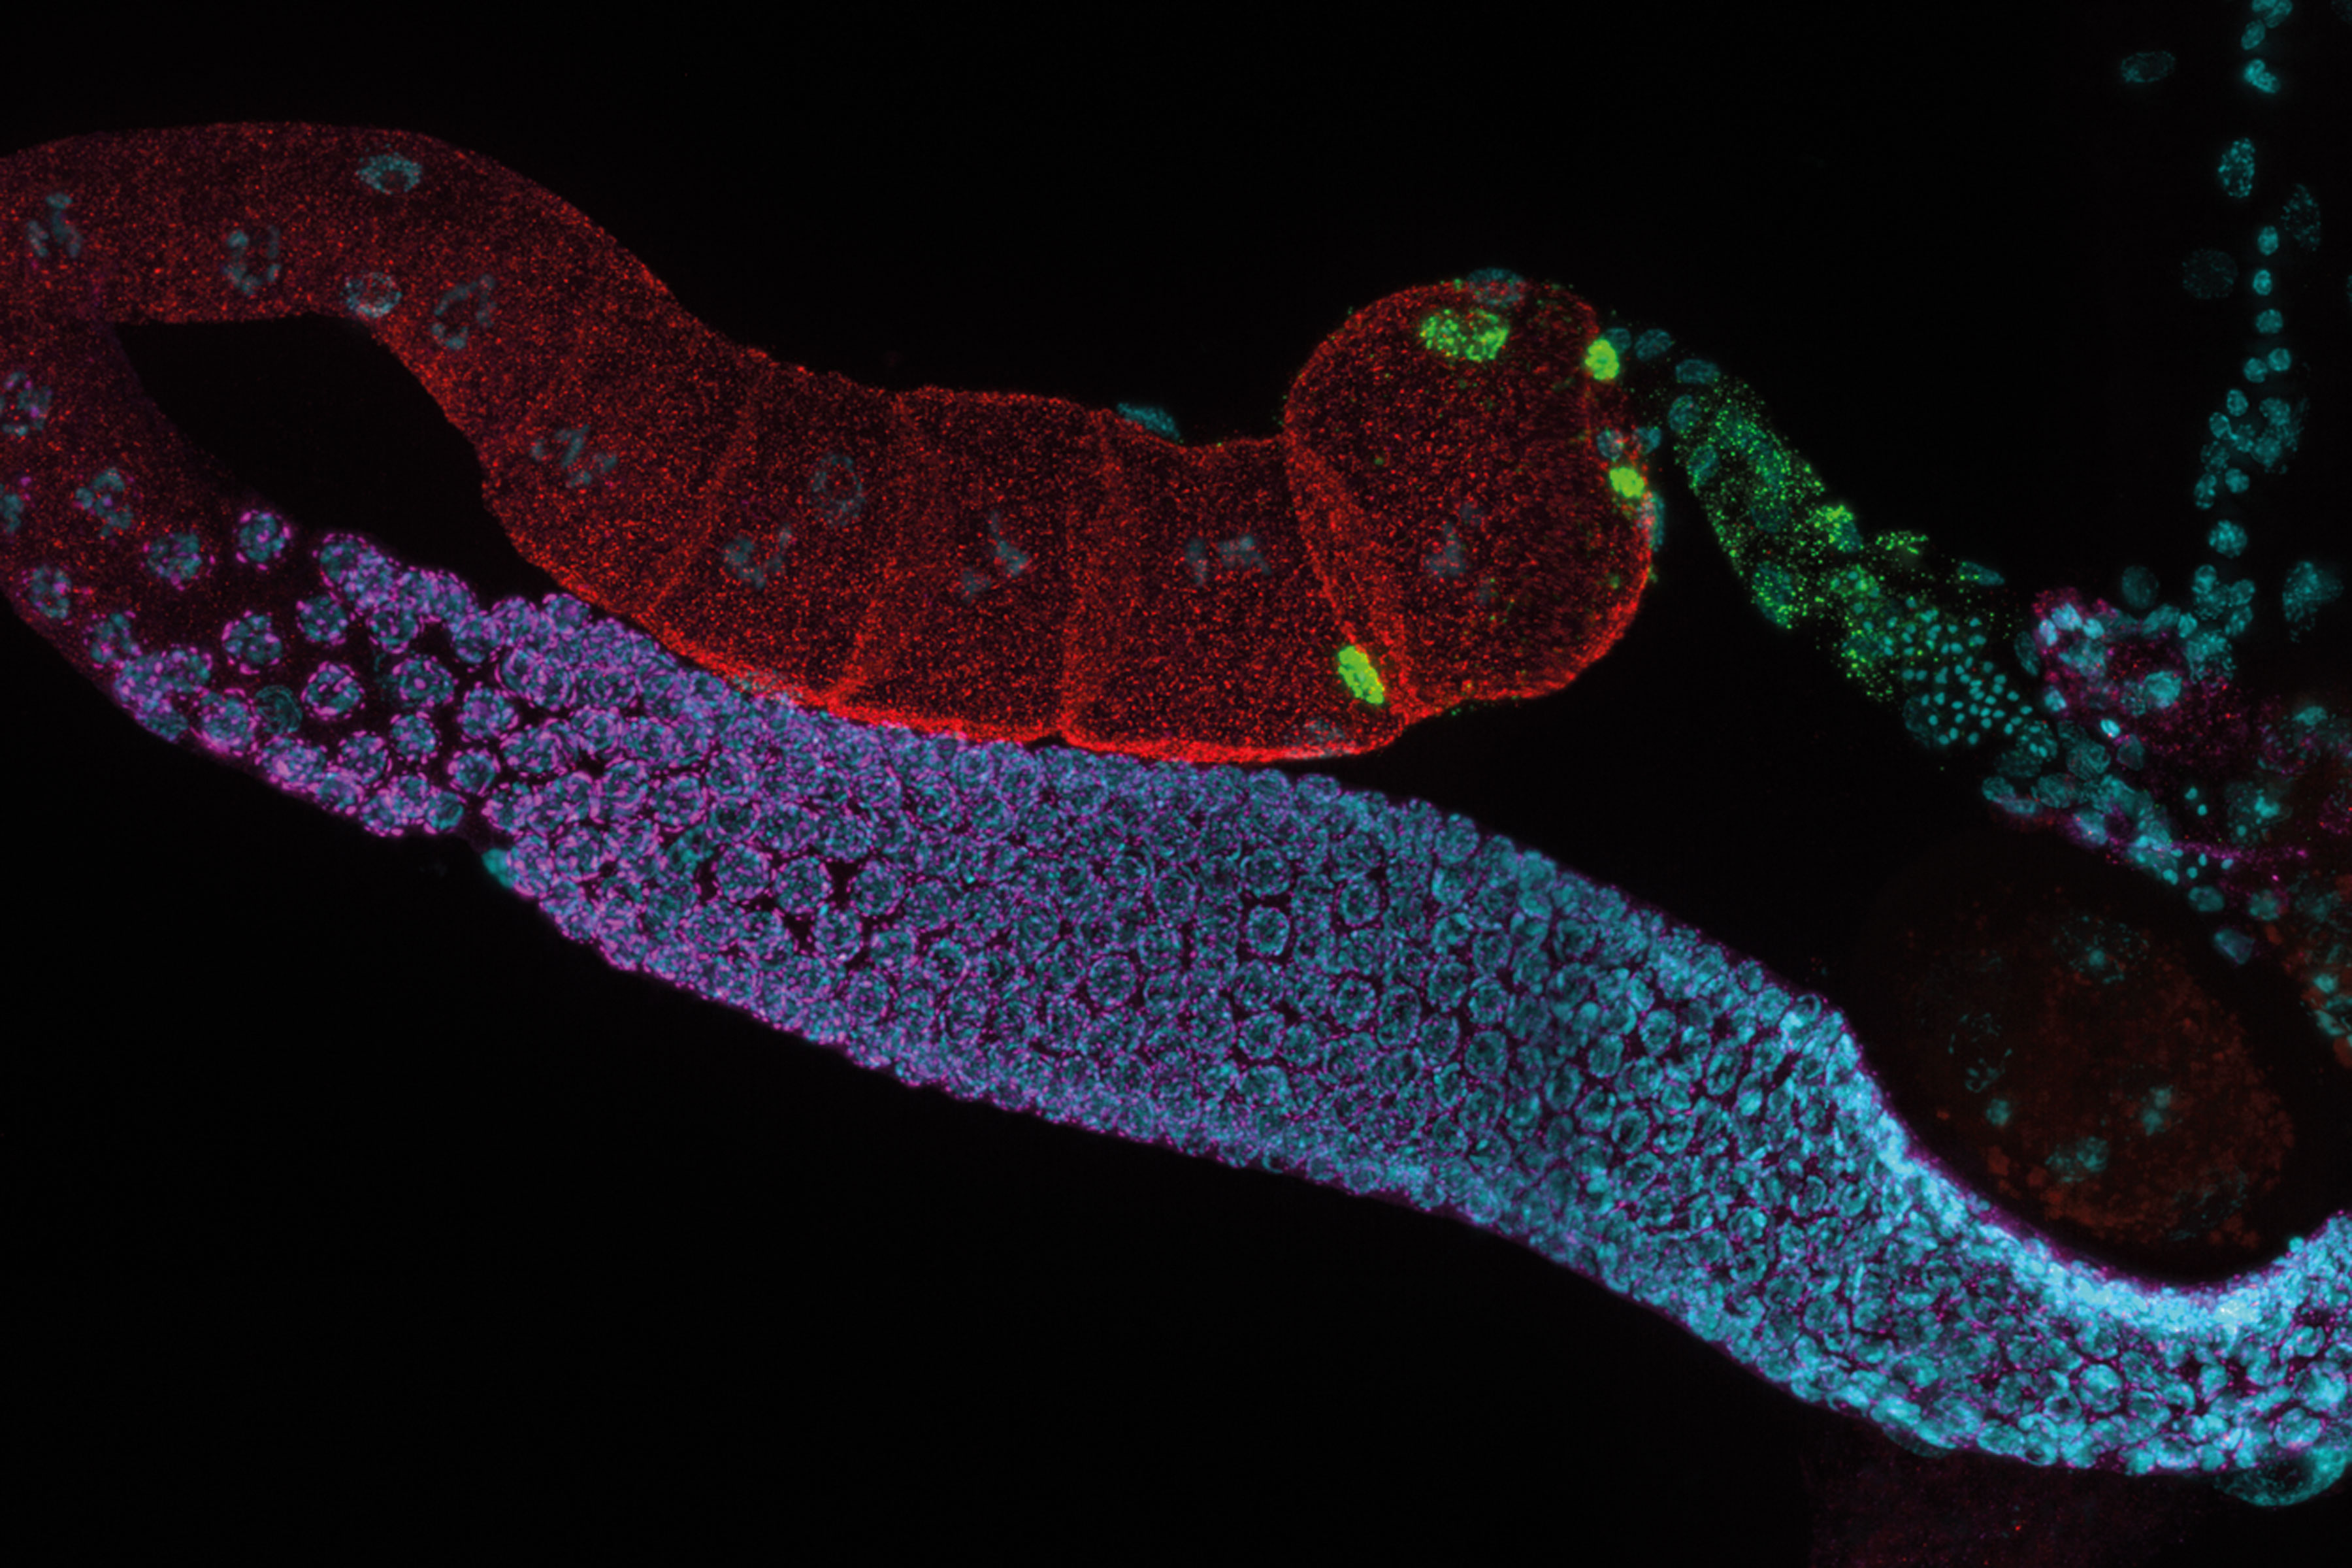 C. elegans Gonades - THUNDER Imager  Adult hermaphrodit, Staining: blue - DAPI (Nucleus), green - SP56 (sperms), red - RME-2 (oocyte), mangenta - PGL-1 (RNA + protein granules) Image courtesy of Prof. Dr. Christian Eckmann, Martin Luther University, Halle, Germany